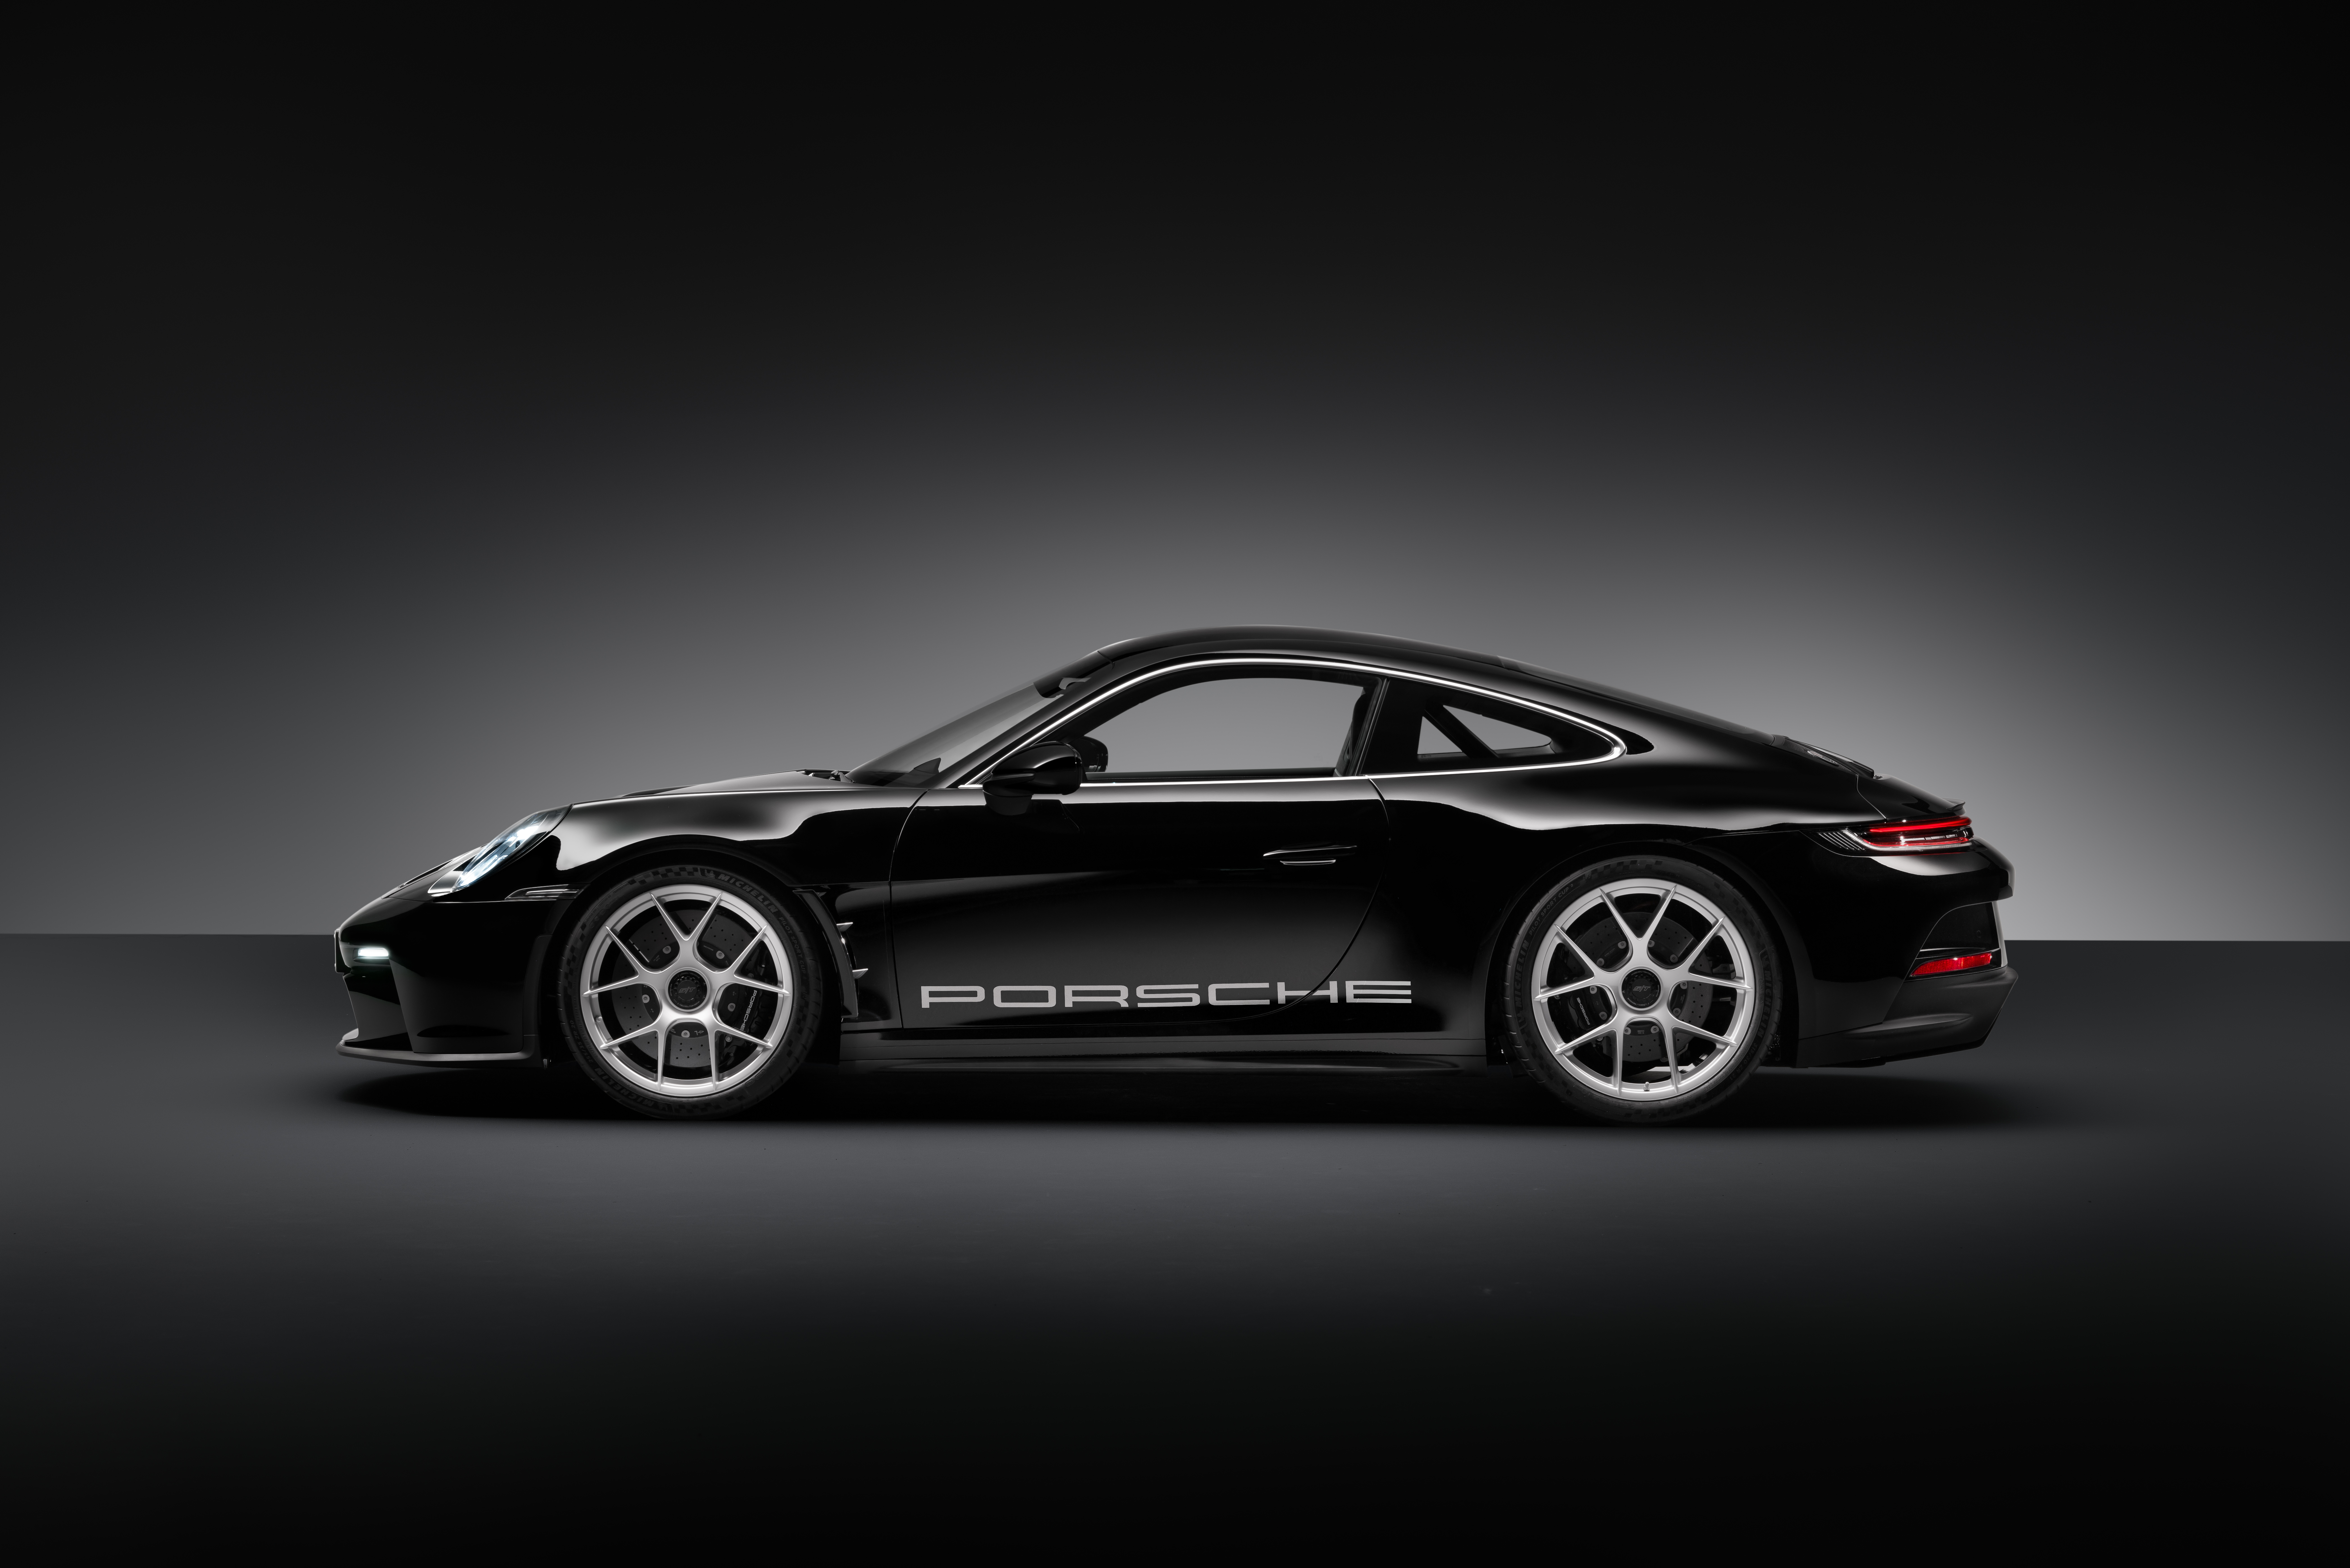 Side view of Porsche 911 S/T in black